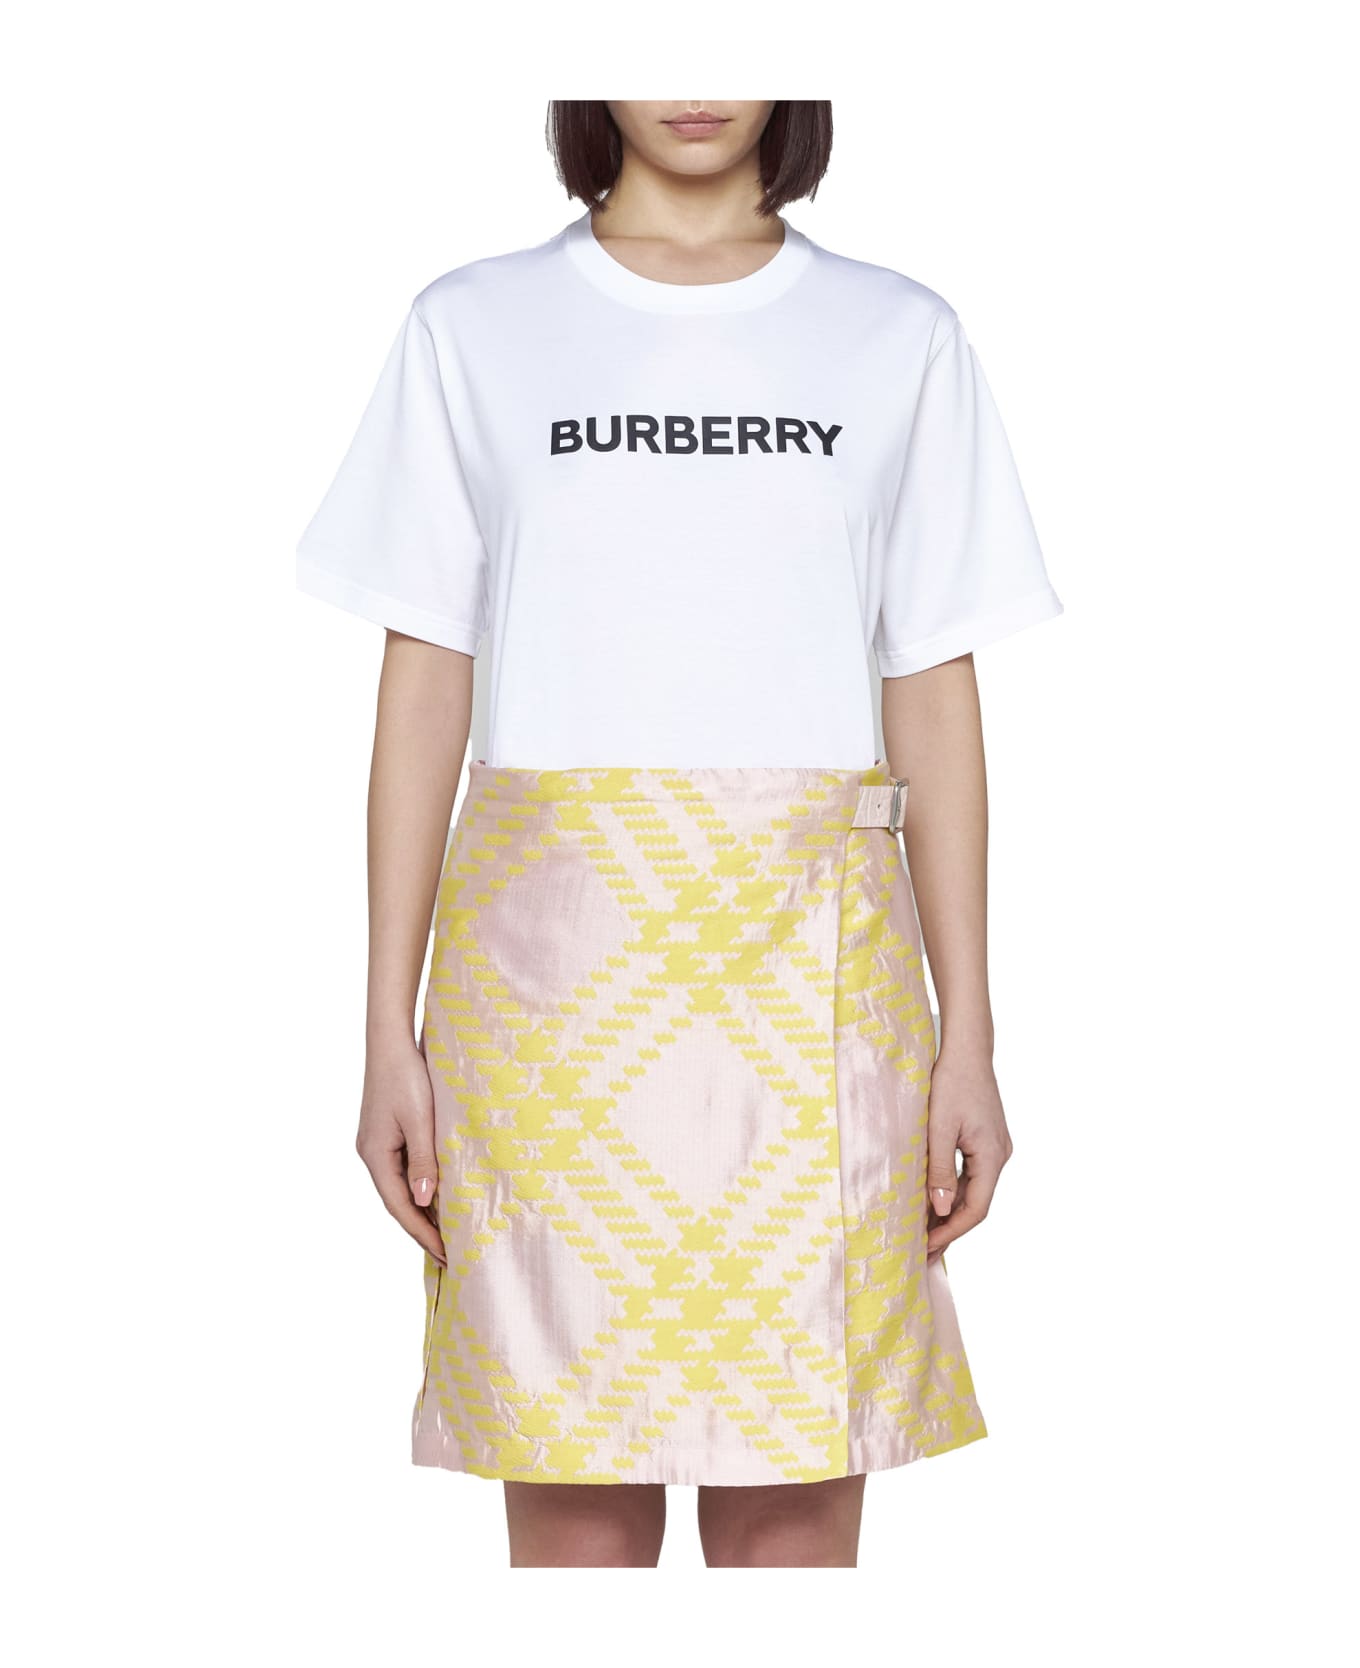 Burberry Skirt - Sherbet ip check